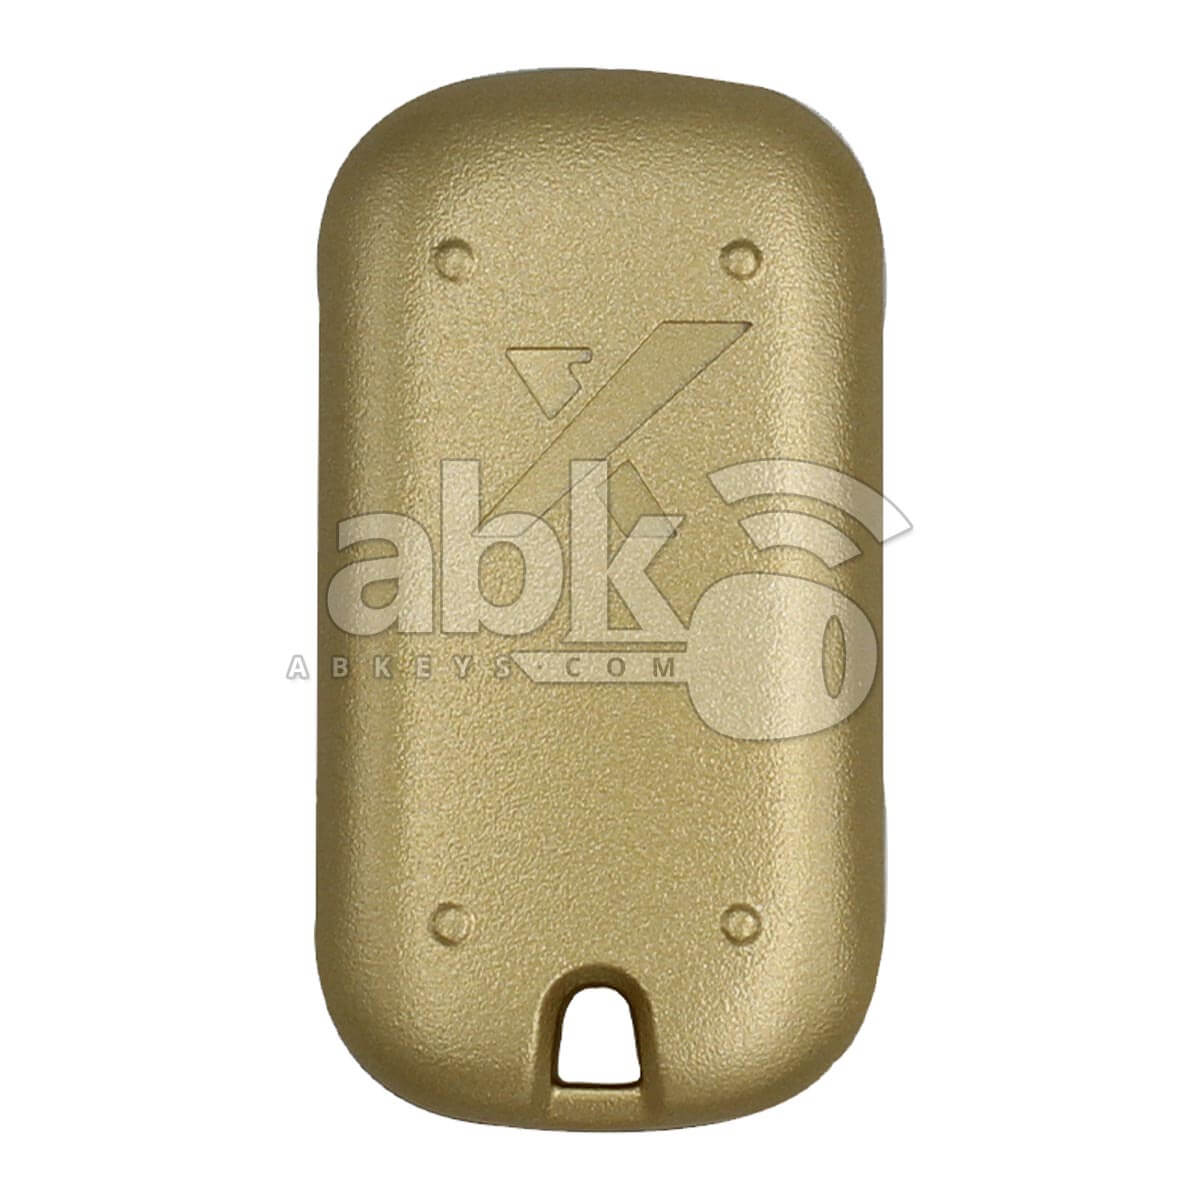 Xhorse VVDI Key Tool VVDI2 Golden Wired Remote Control 4Buttons XKXH02EN - ABK-1015-XKXH02EN - 